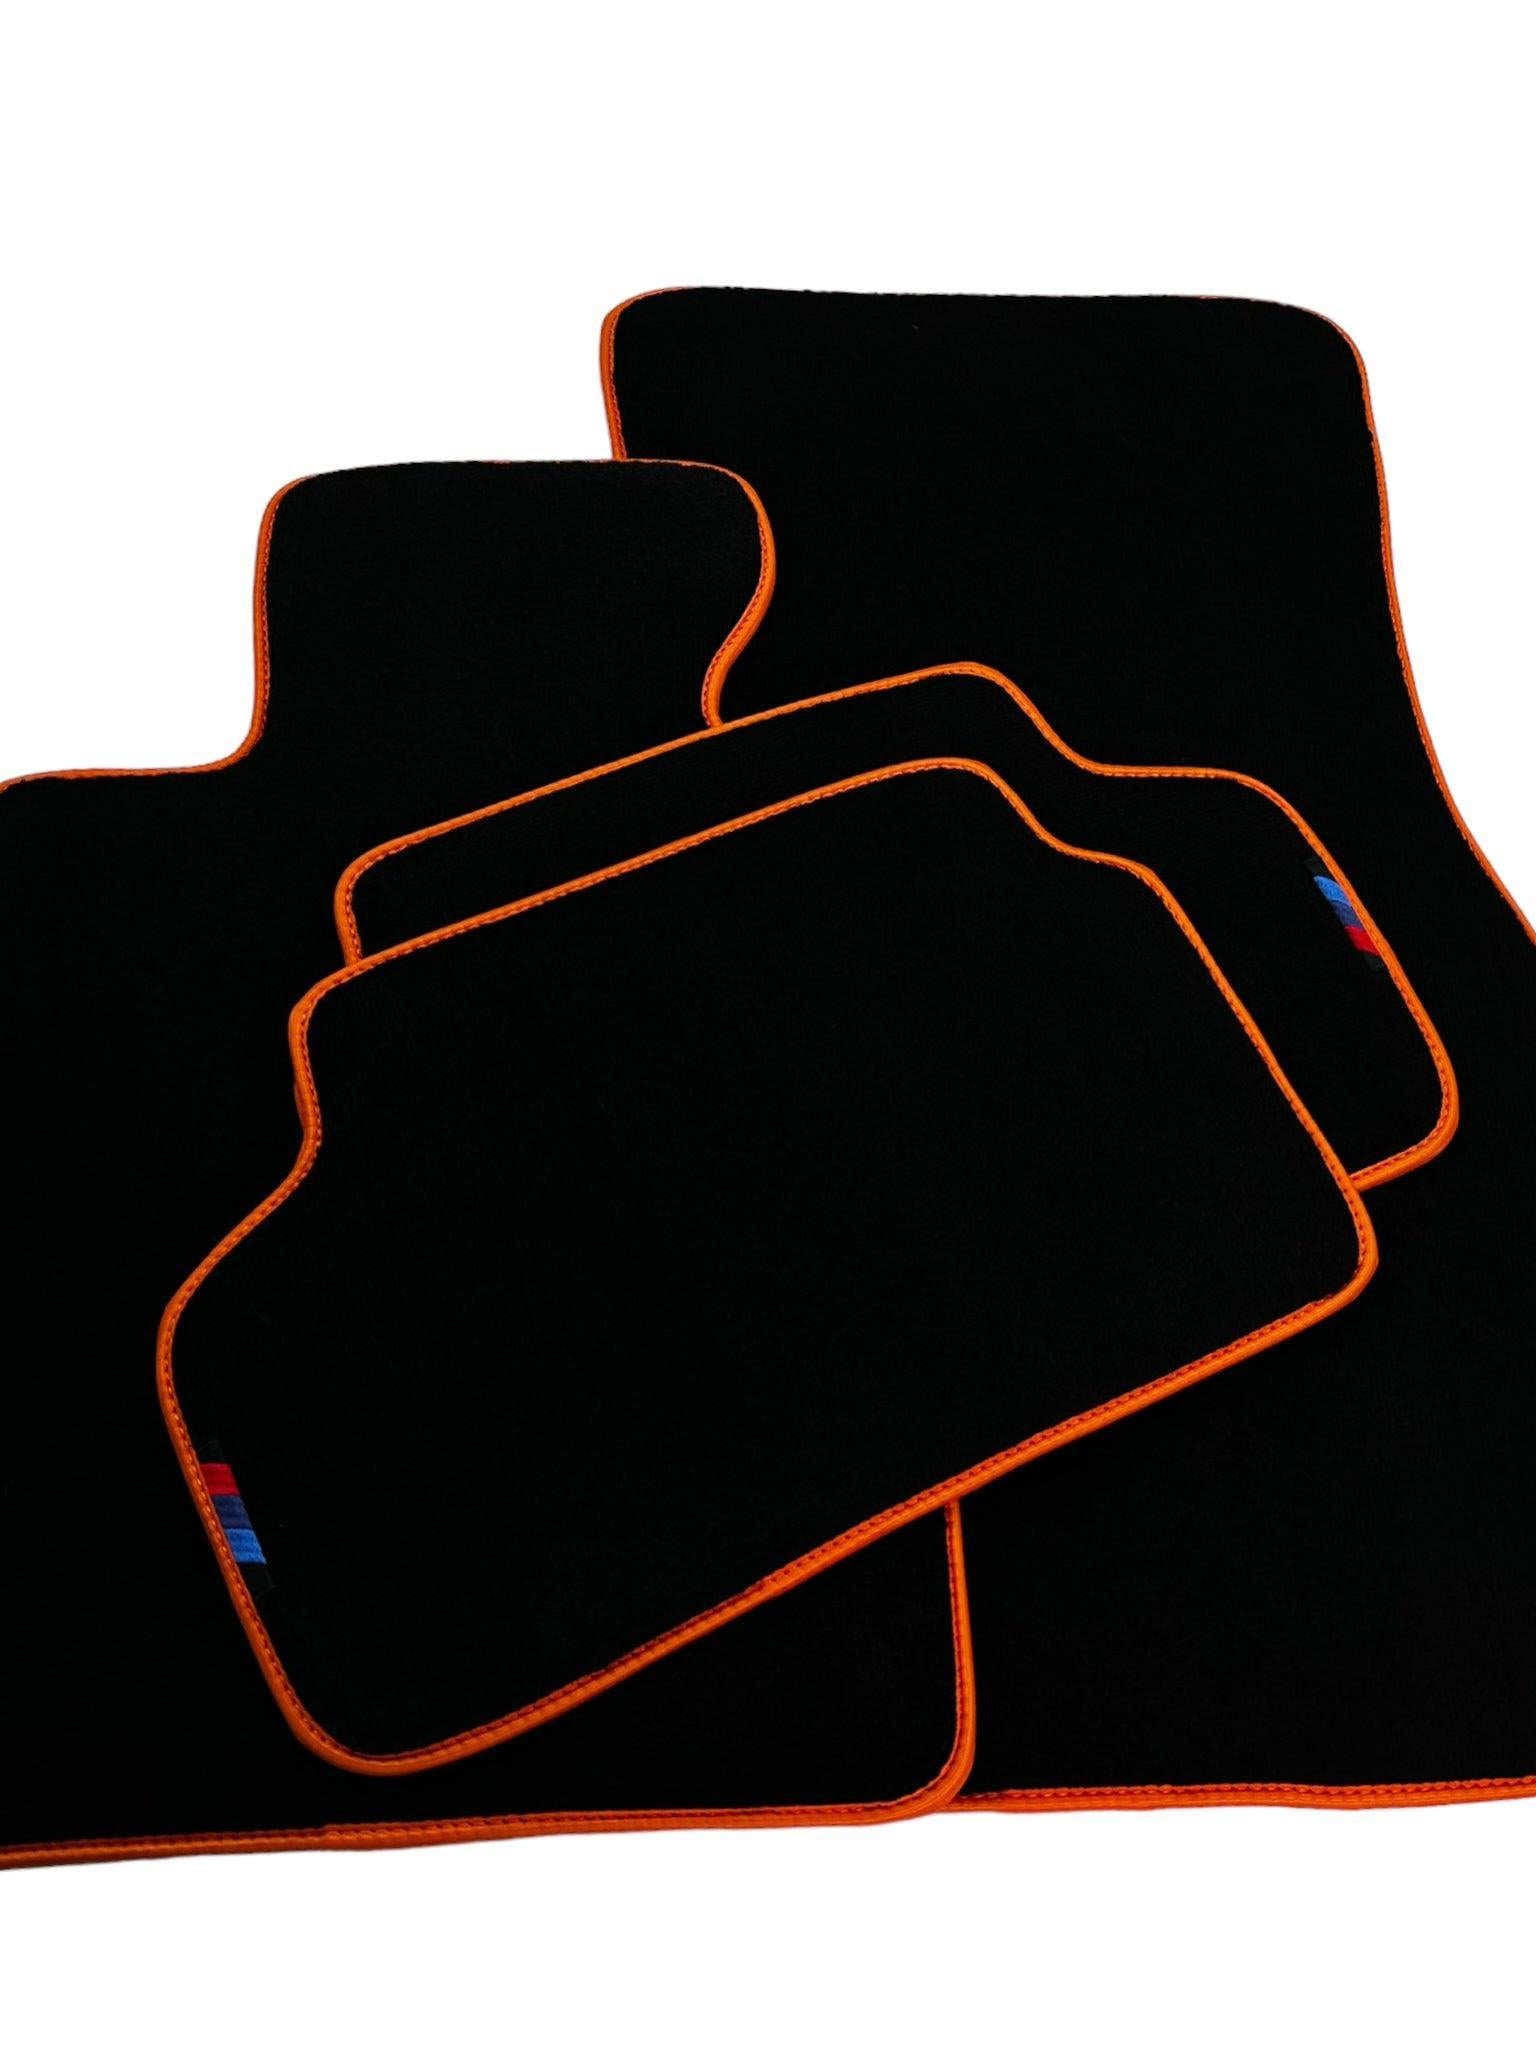 Black Floor Mats For BMW X6 Series F16 | Orange Trim